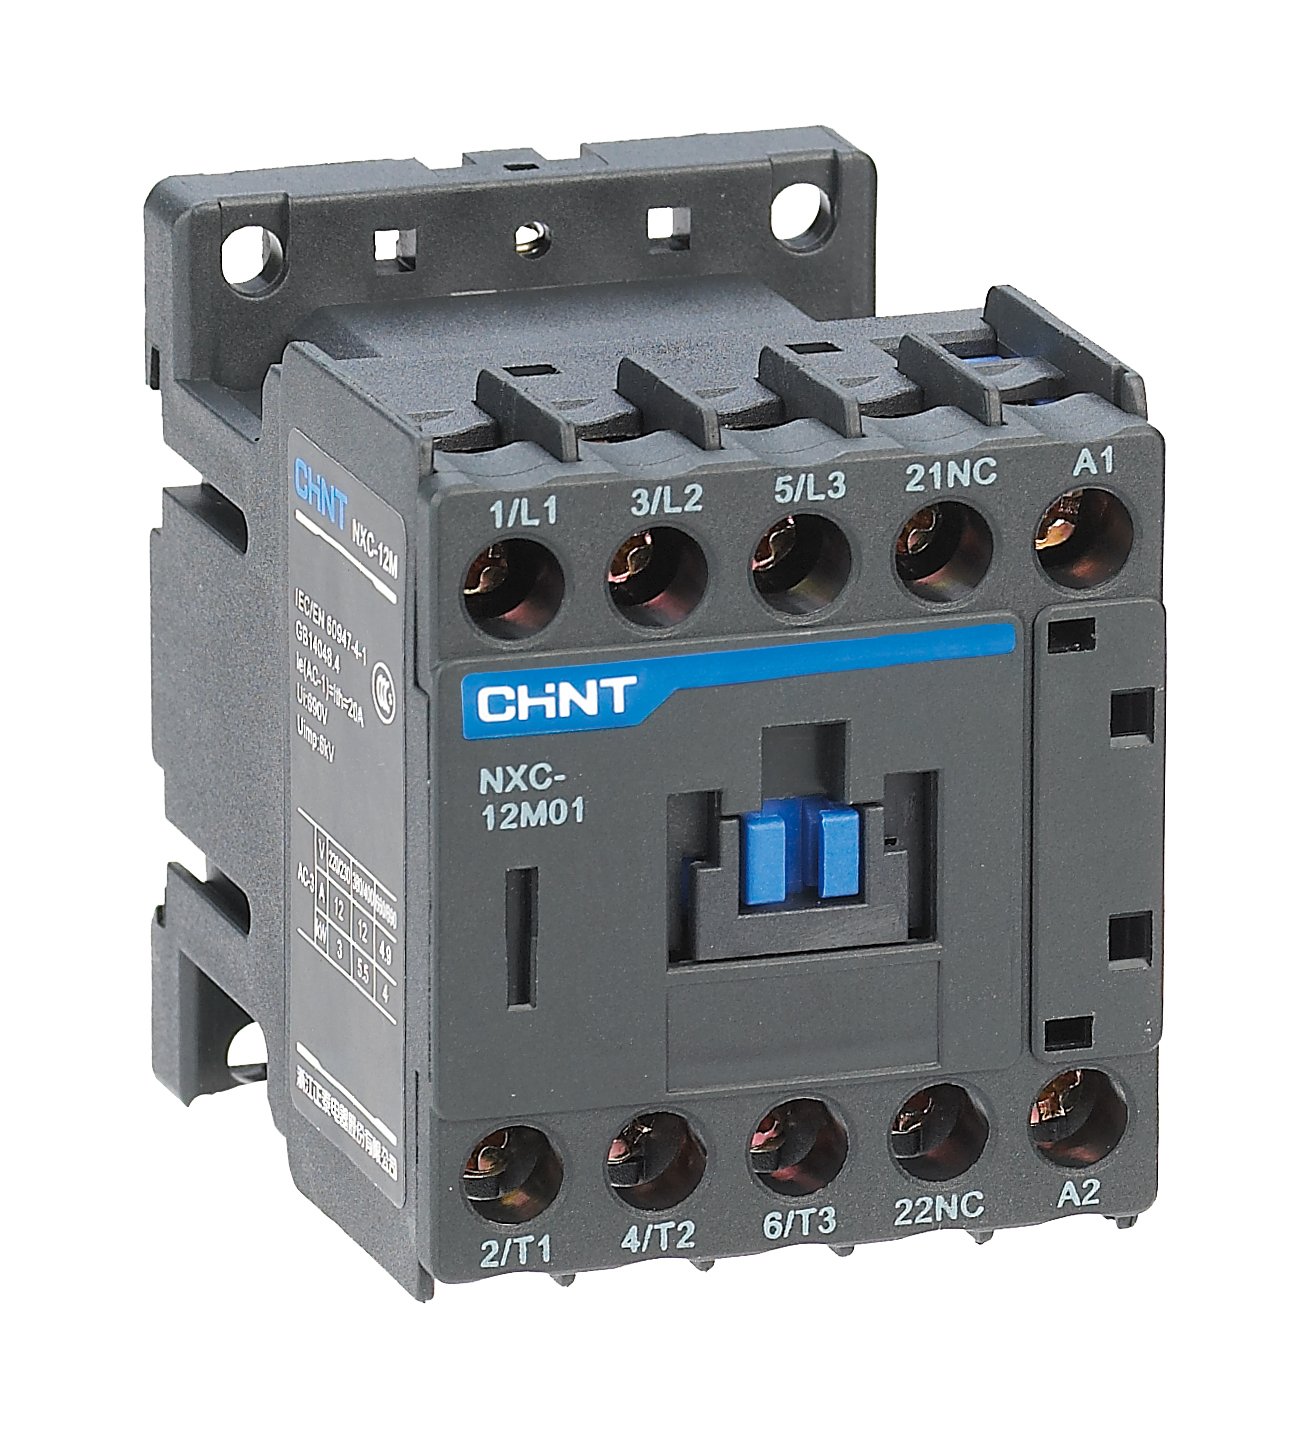 NXC-09M10 220V 50/60Hz(R) Mini kontaktör